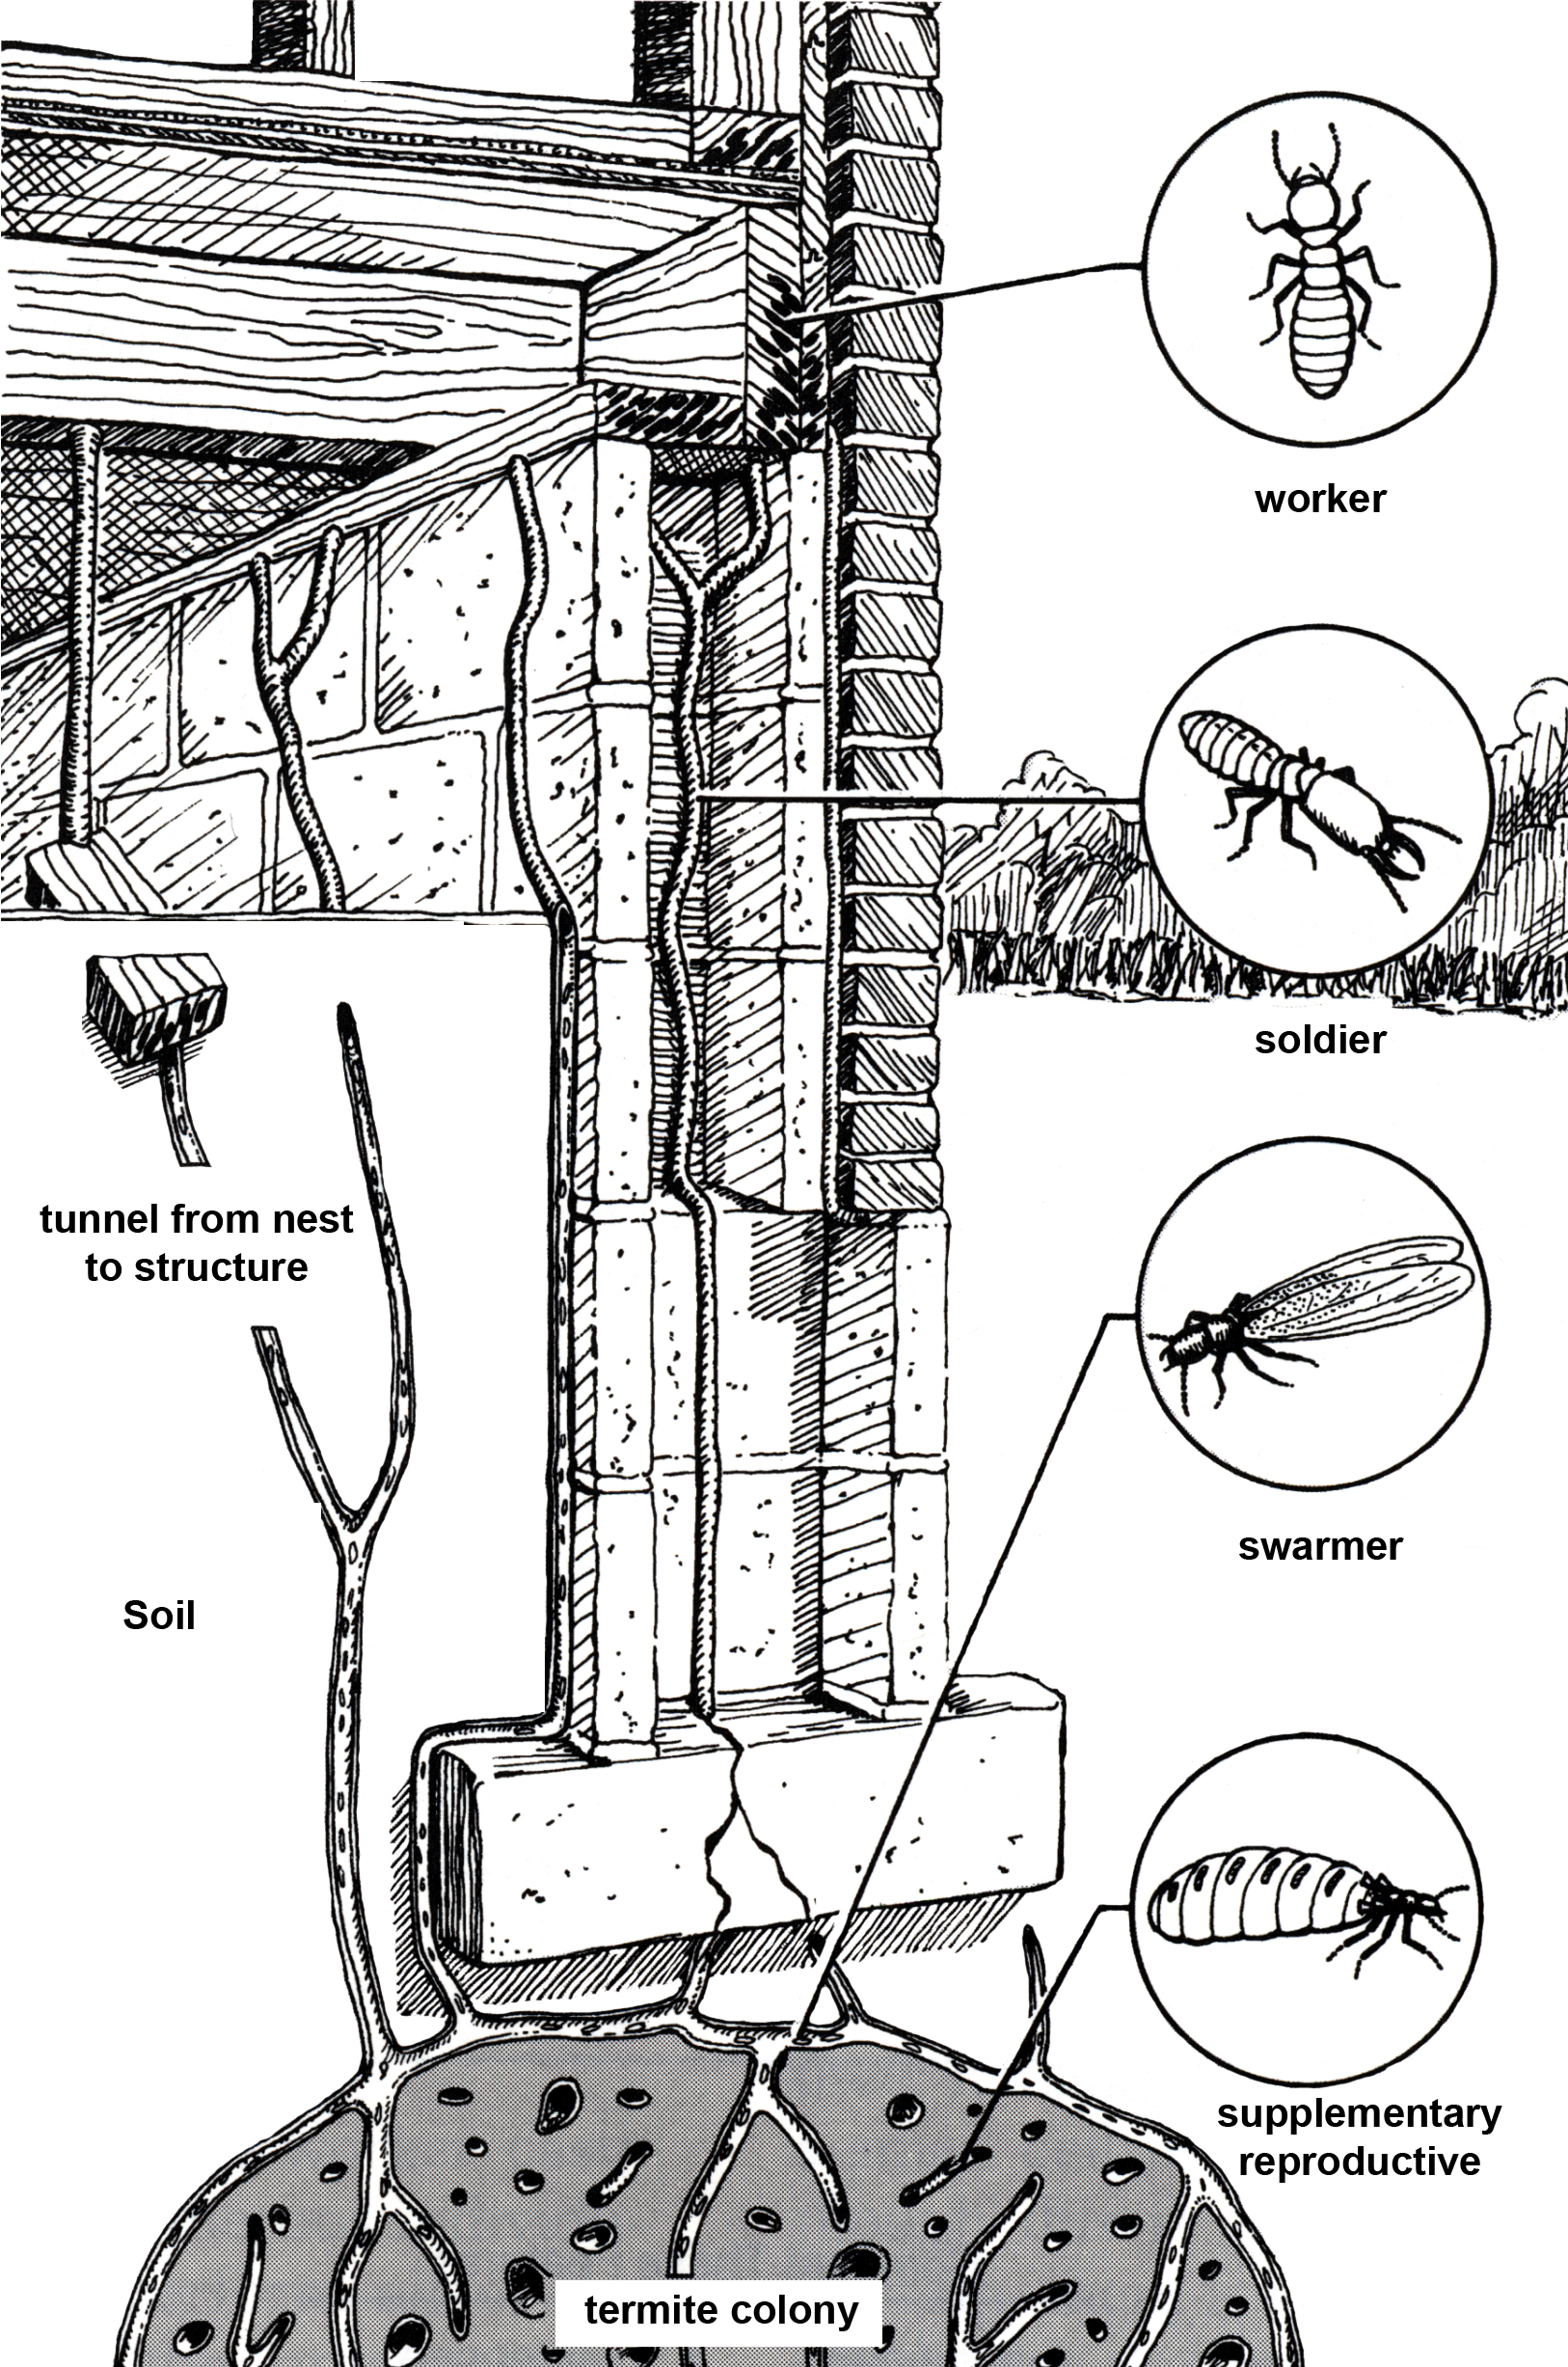 Termite life-cycle and habitat.